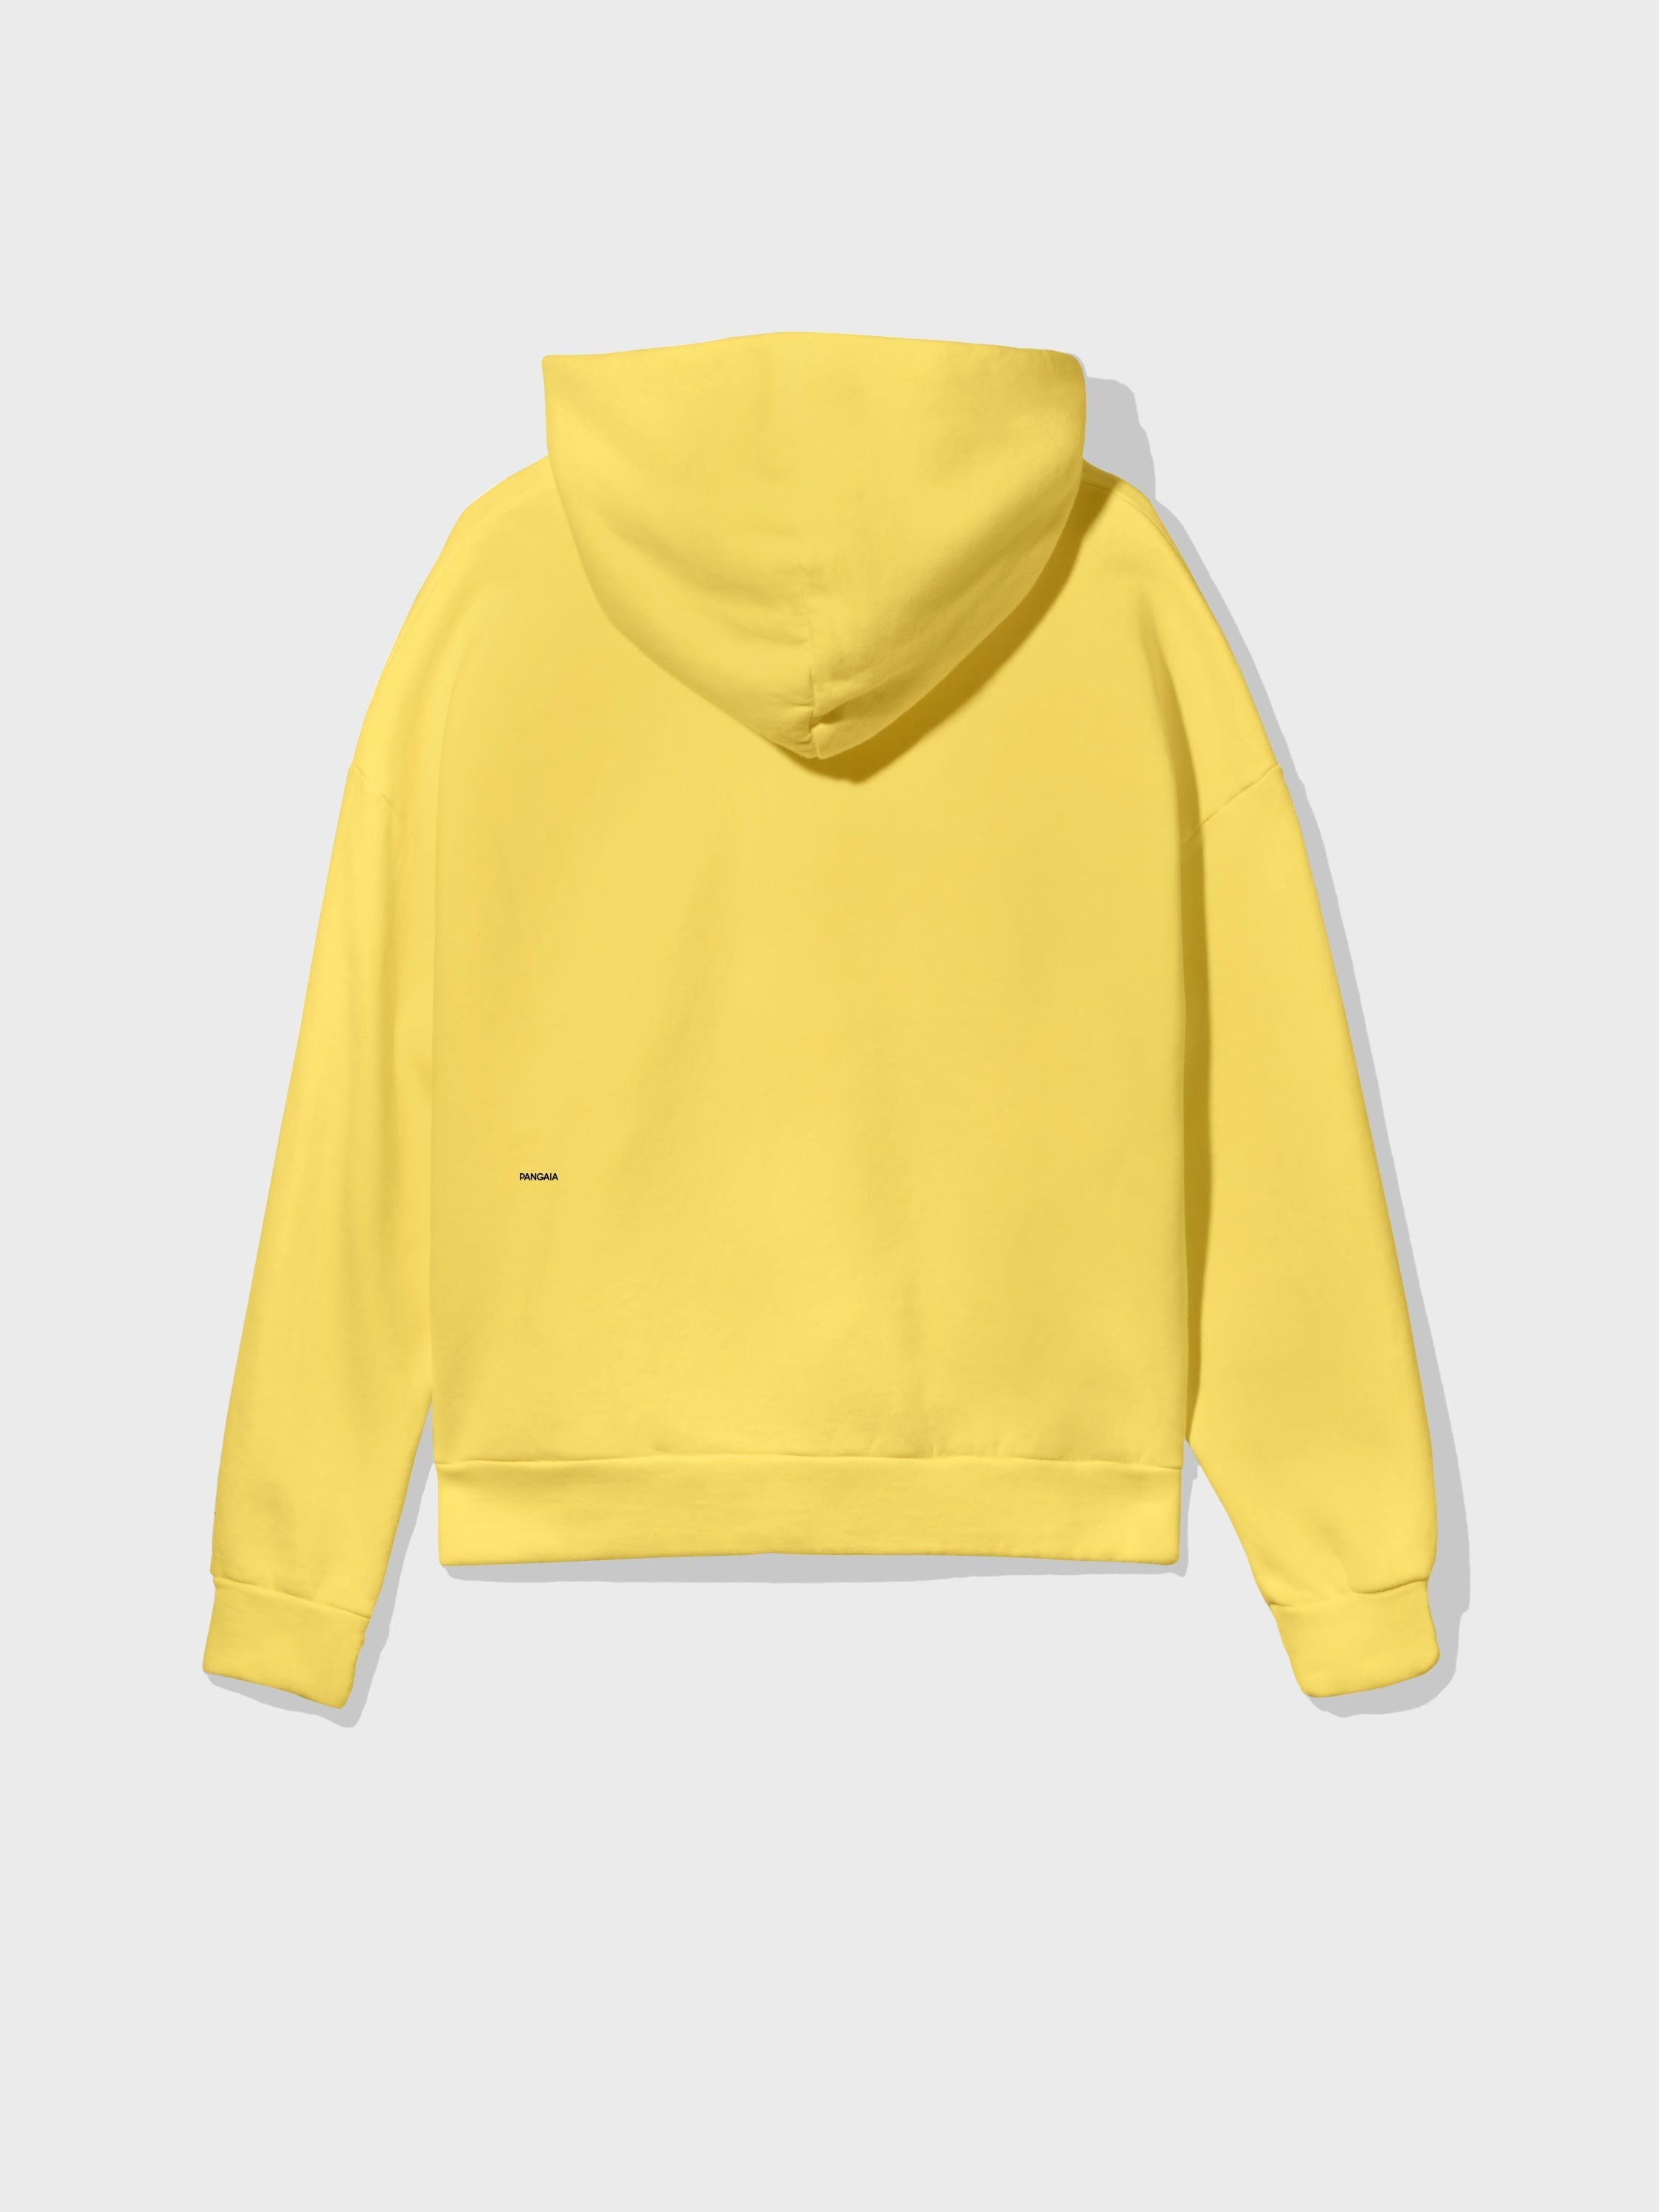 lightweight yellow hoodie